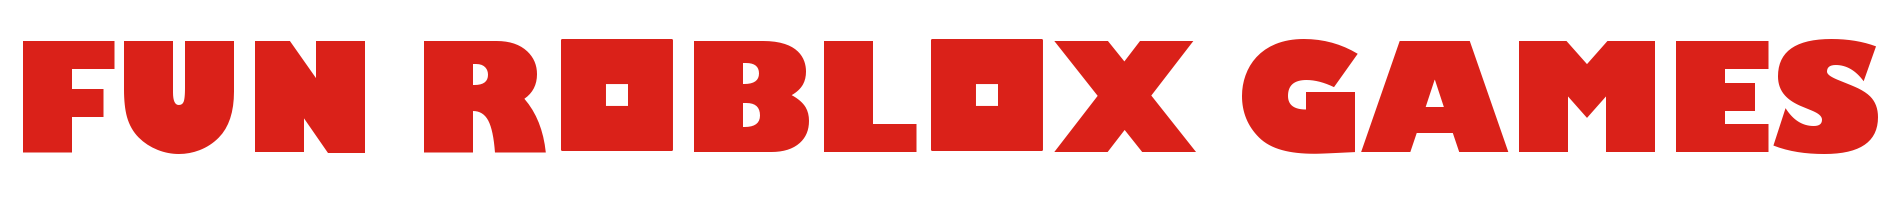 Fun Roblox Games Logo